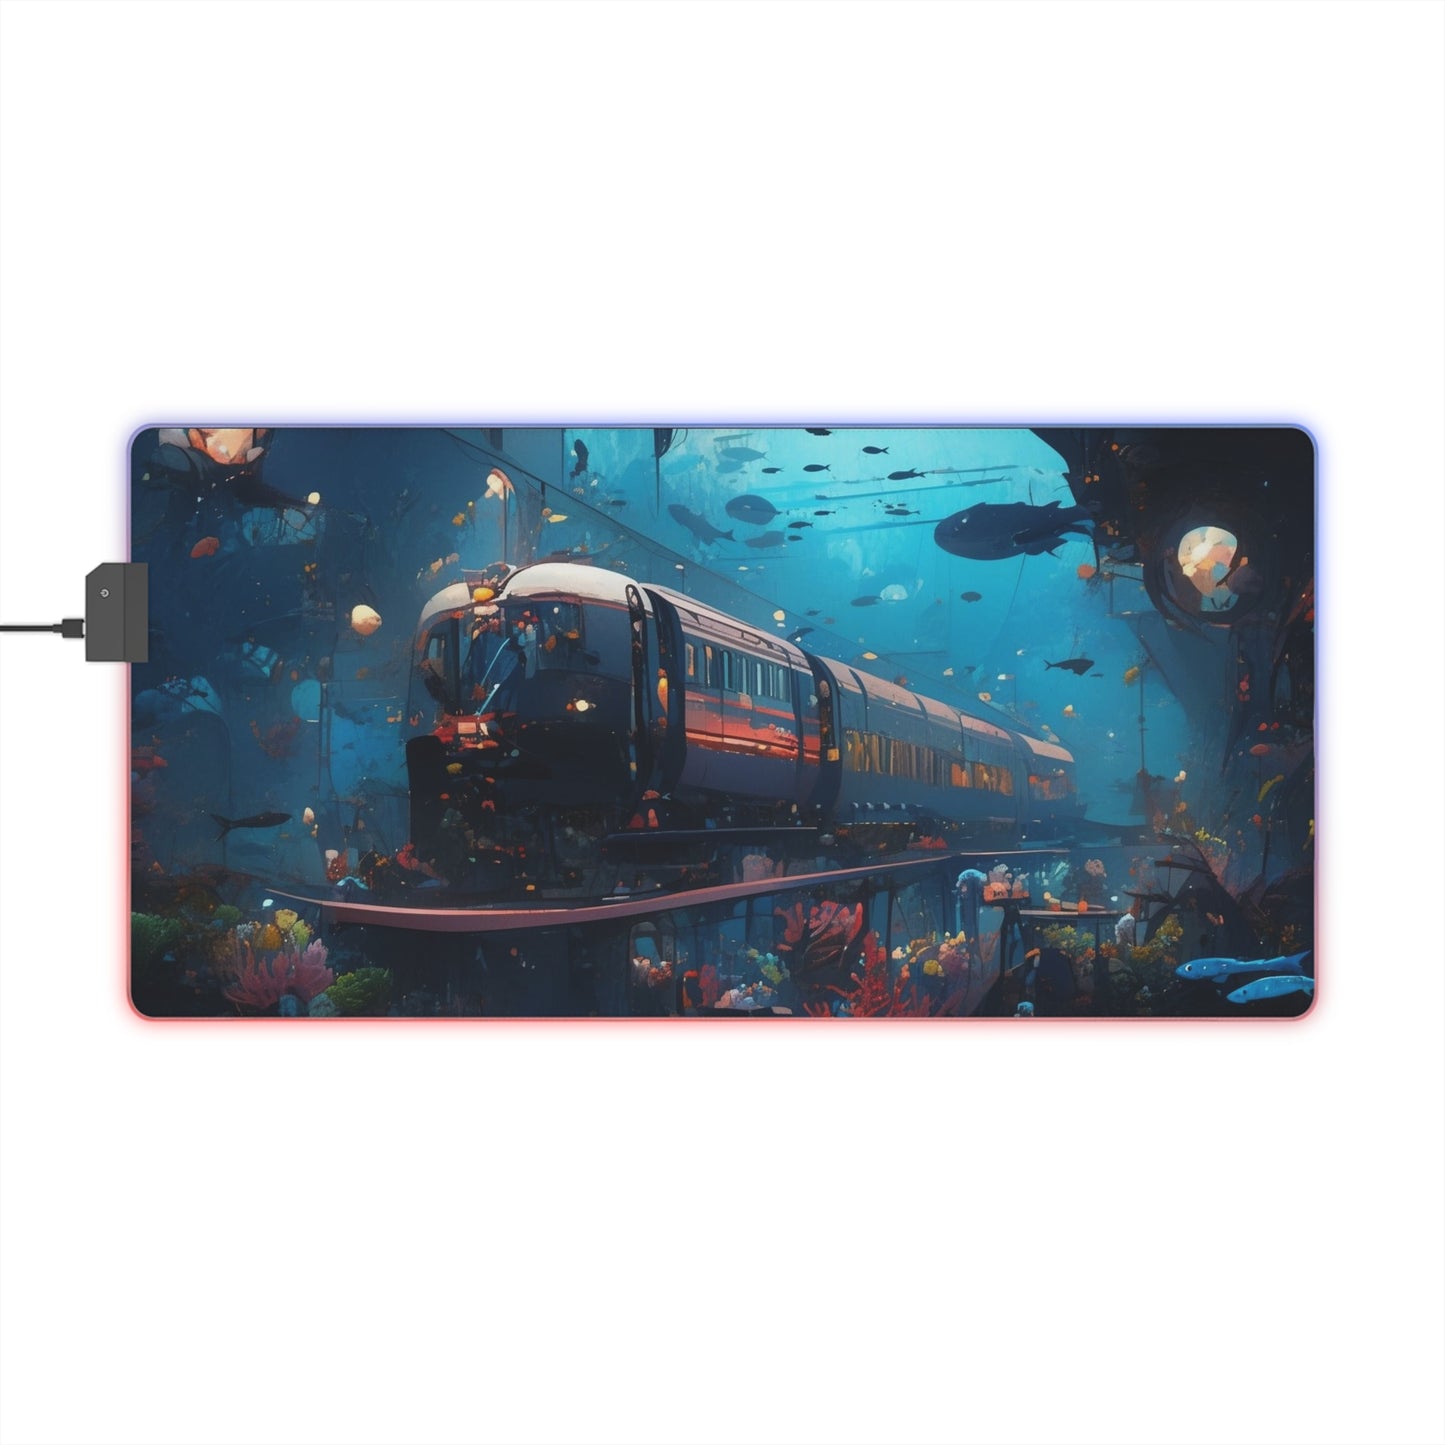 Submerged Metro LED Gaming Mouse Pad